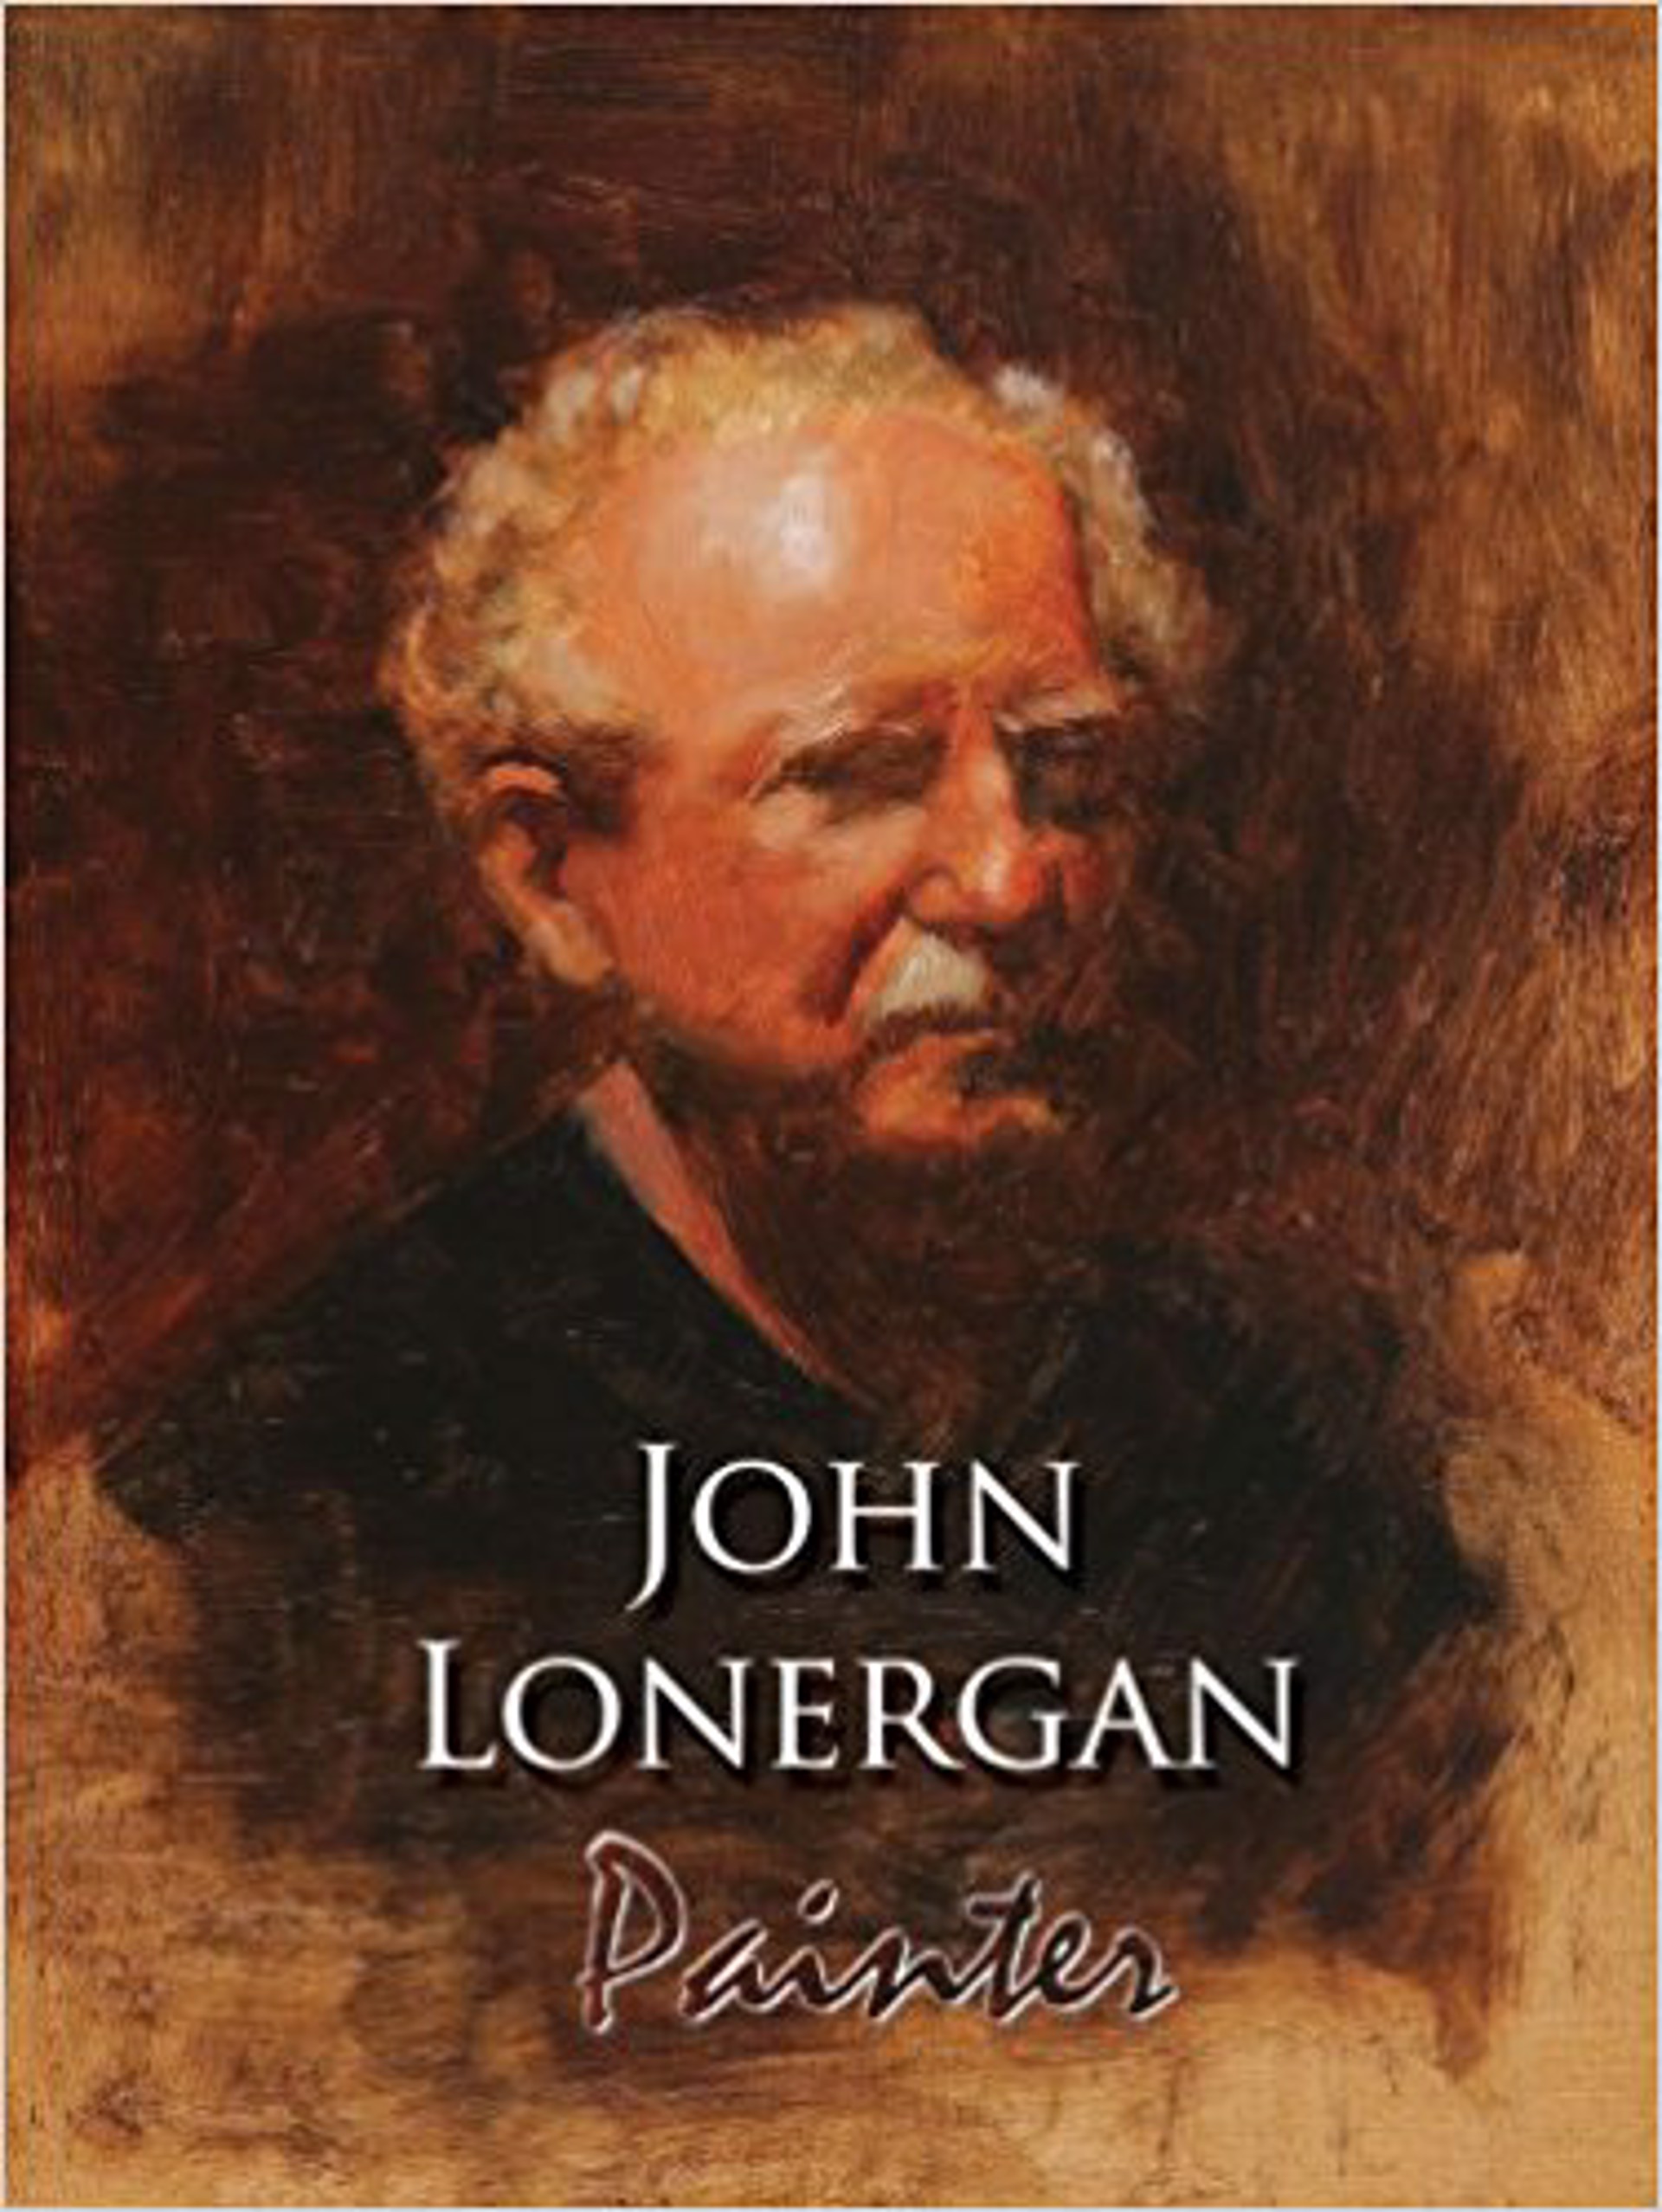 Painter (book) by John Lonergan